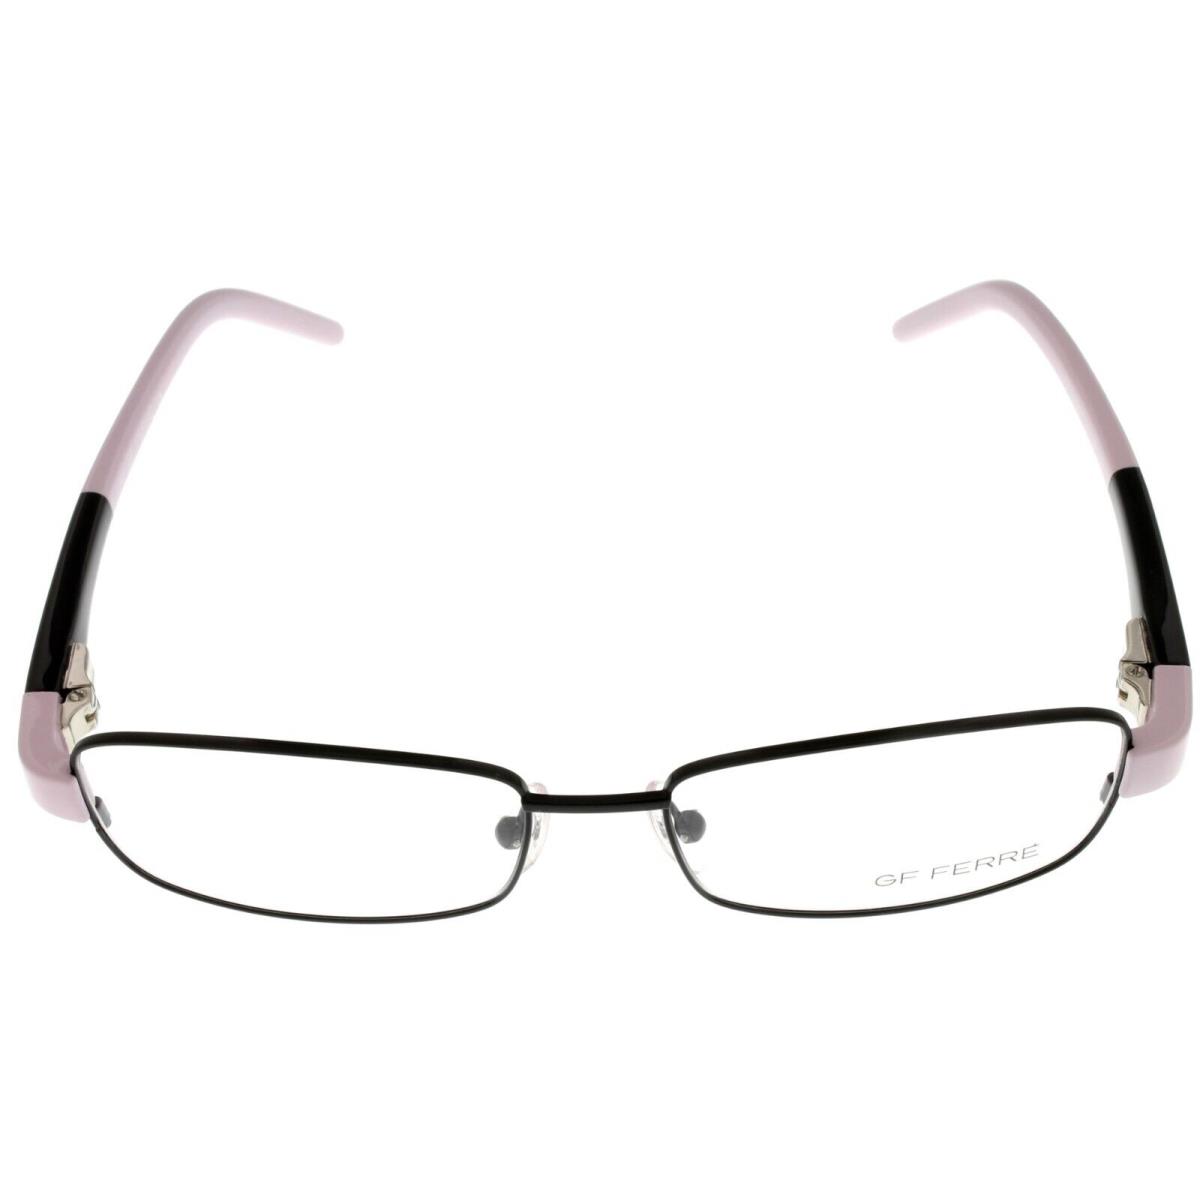 Gianfranco Ferre Eyeglasses Frame Wonen Black Lilac Rectangular FF185 01